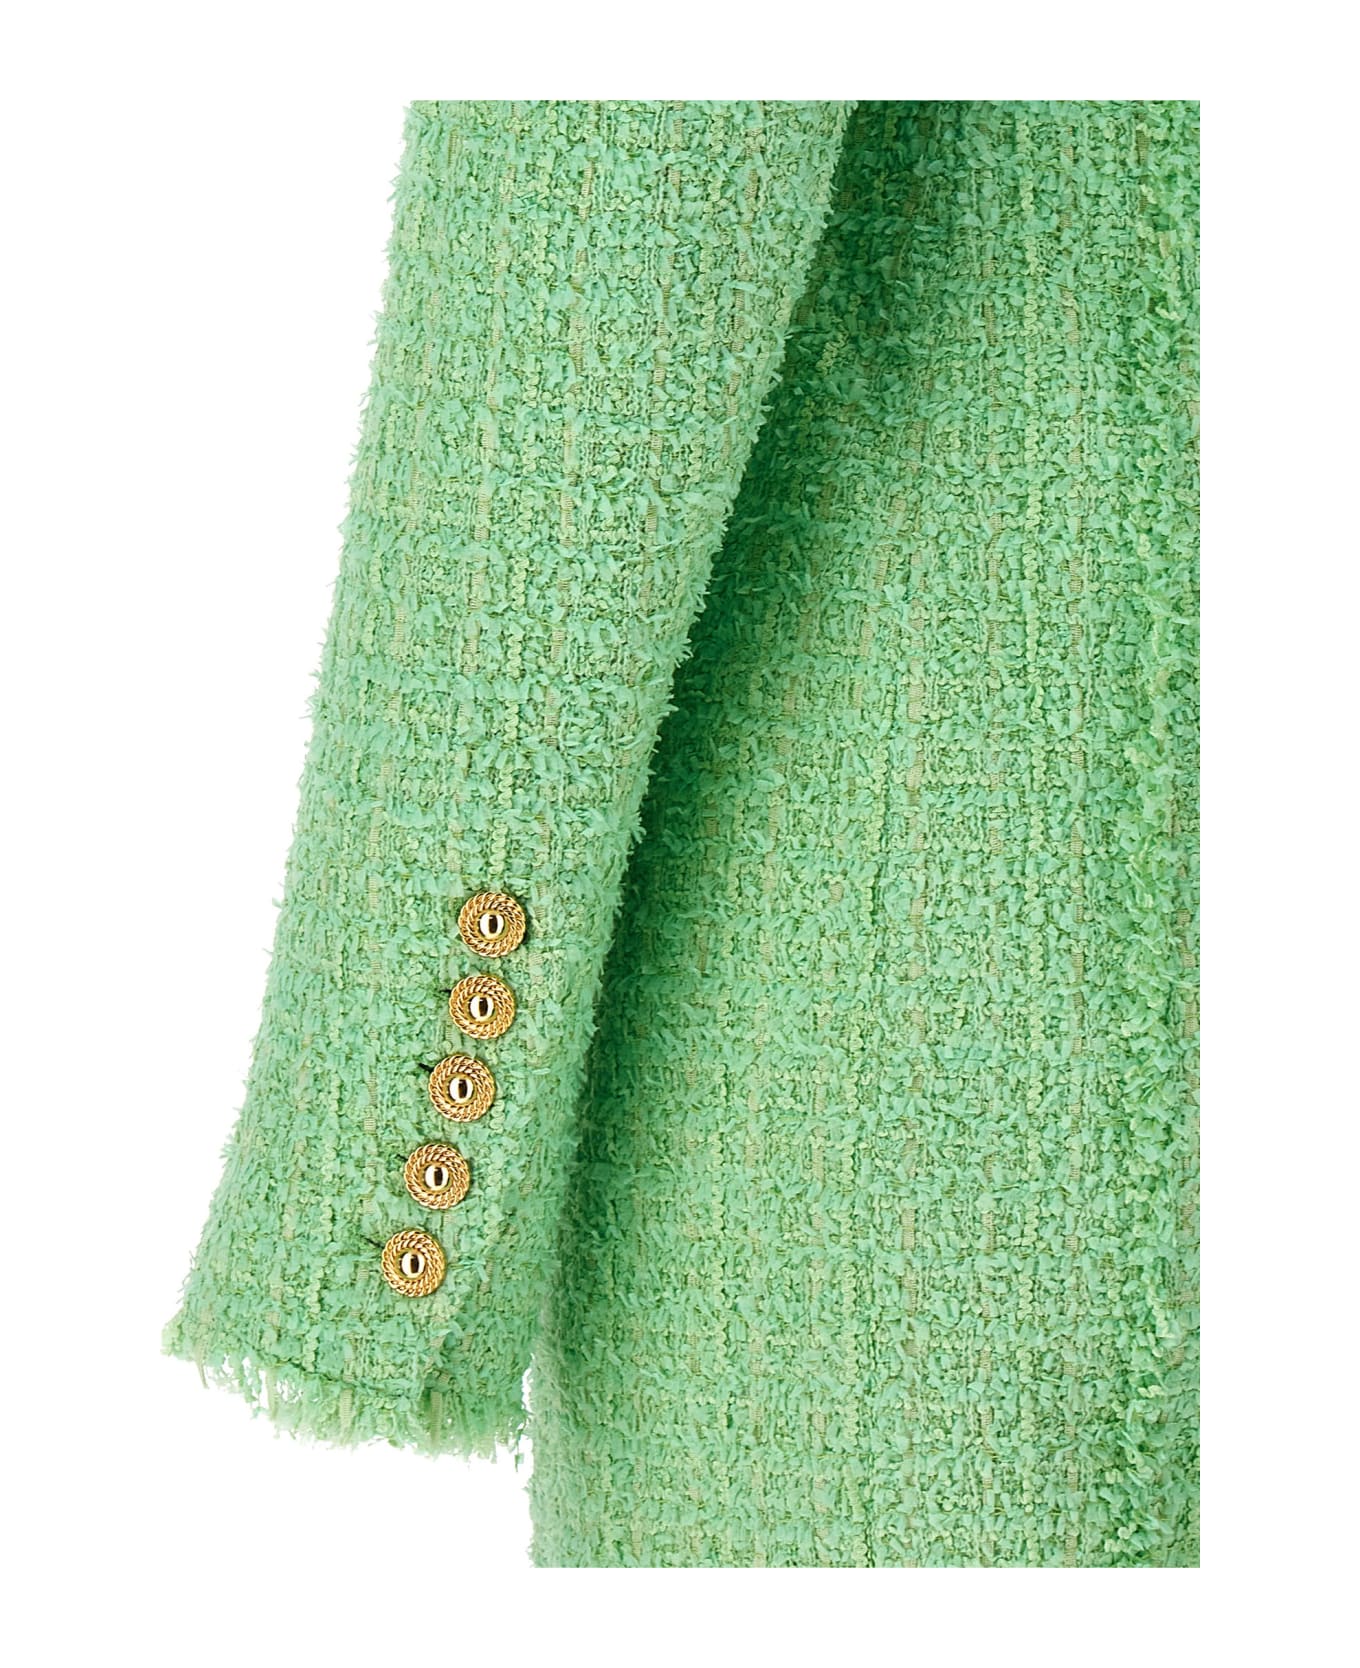 Balmain Logo Button Tweed Dress - Green